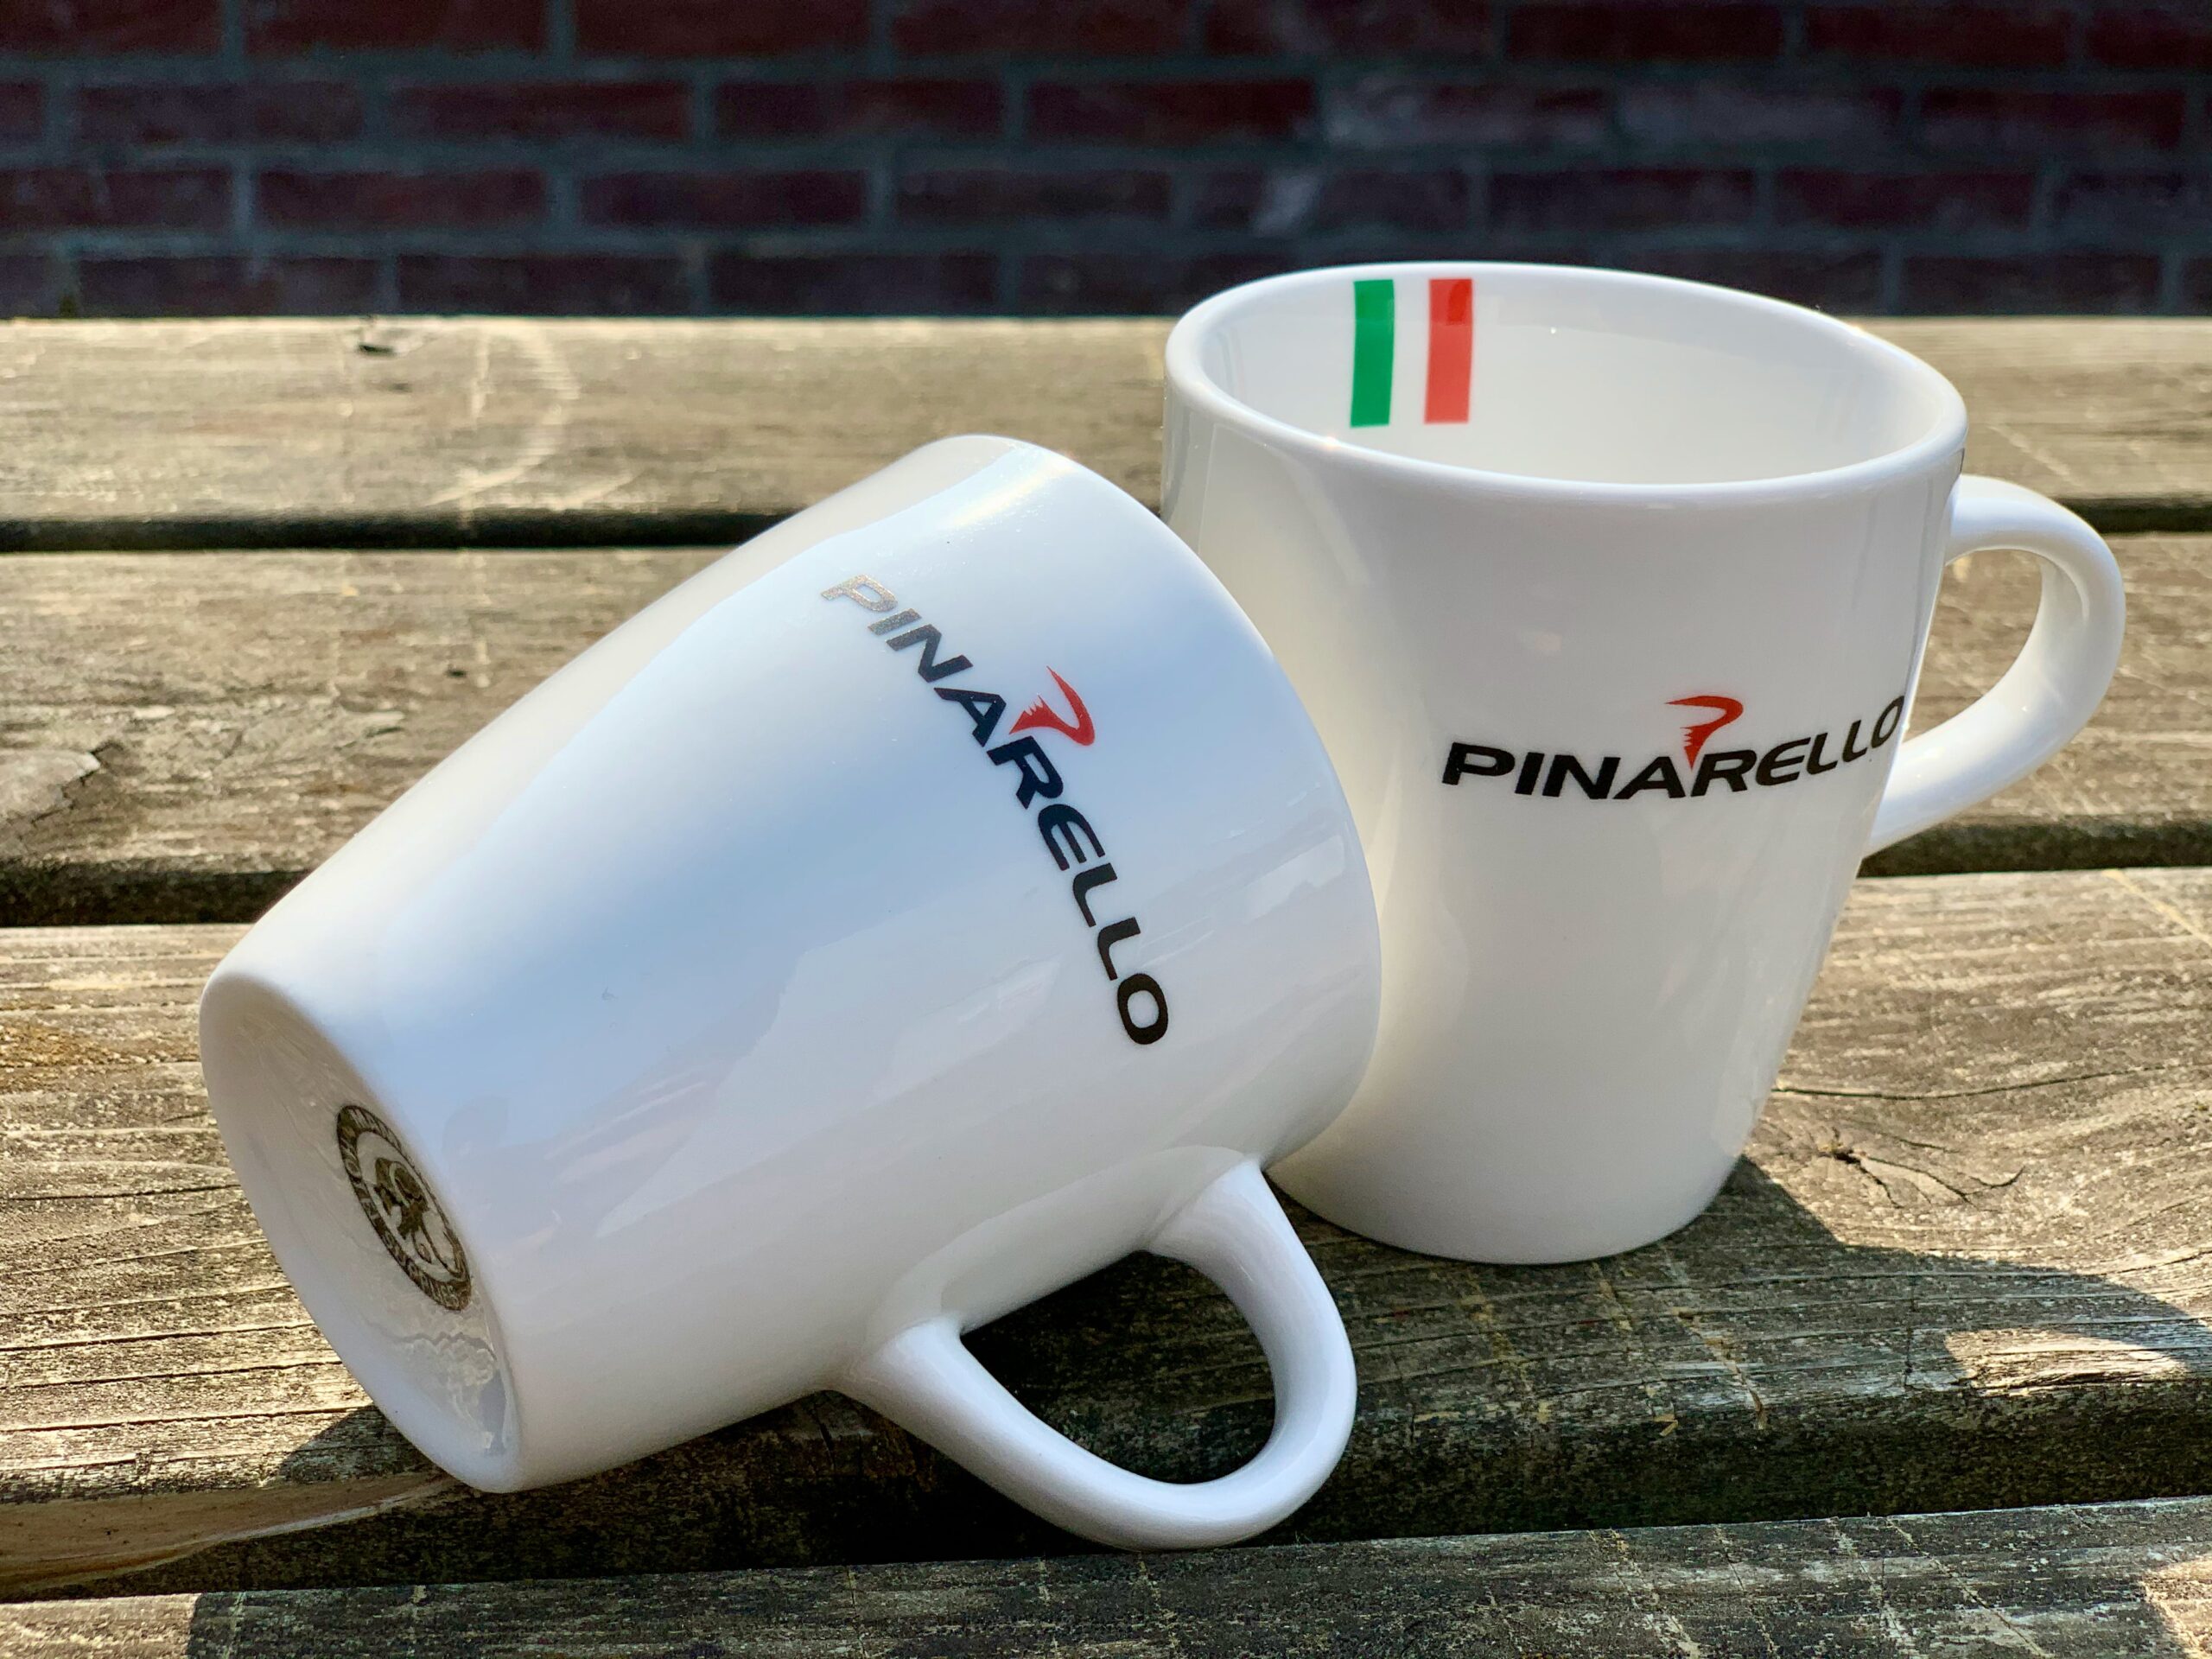 Pinarello / koffie kopjes - Wagenberg 2-Wielers